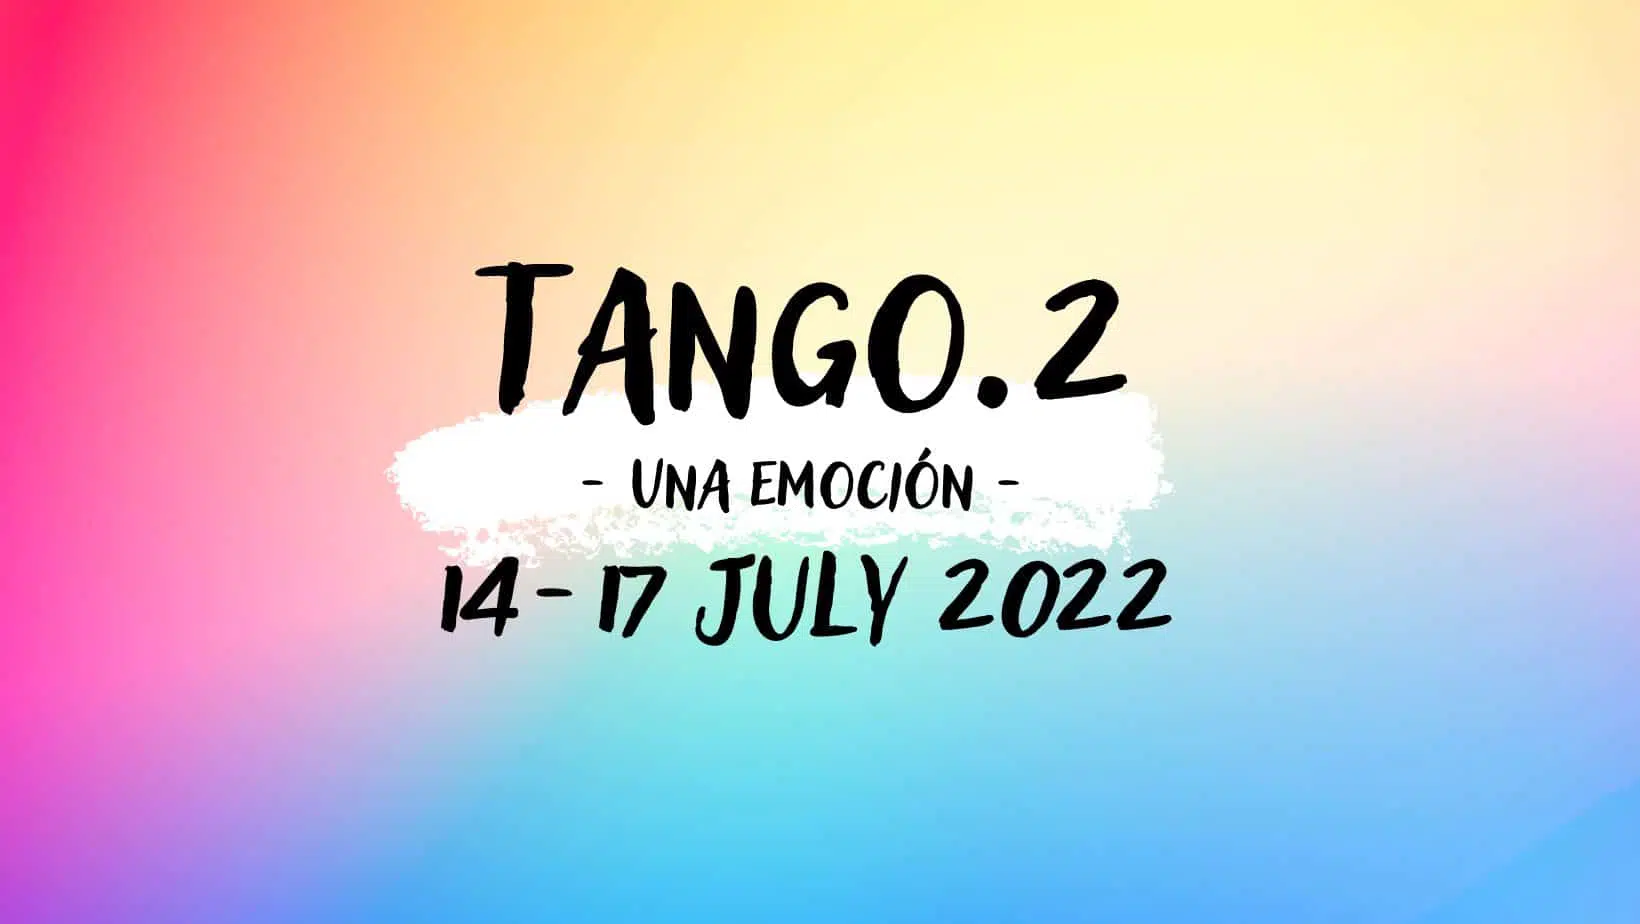 Tango.2 Tango Festival 2022 - Una emoción Preview Image